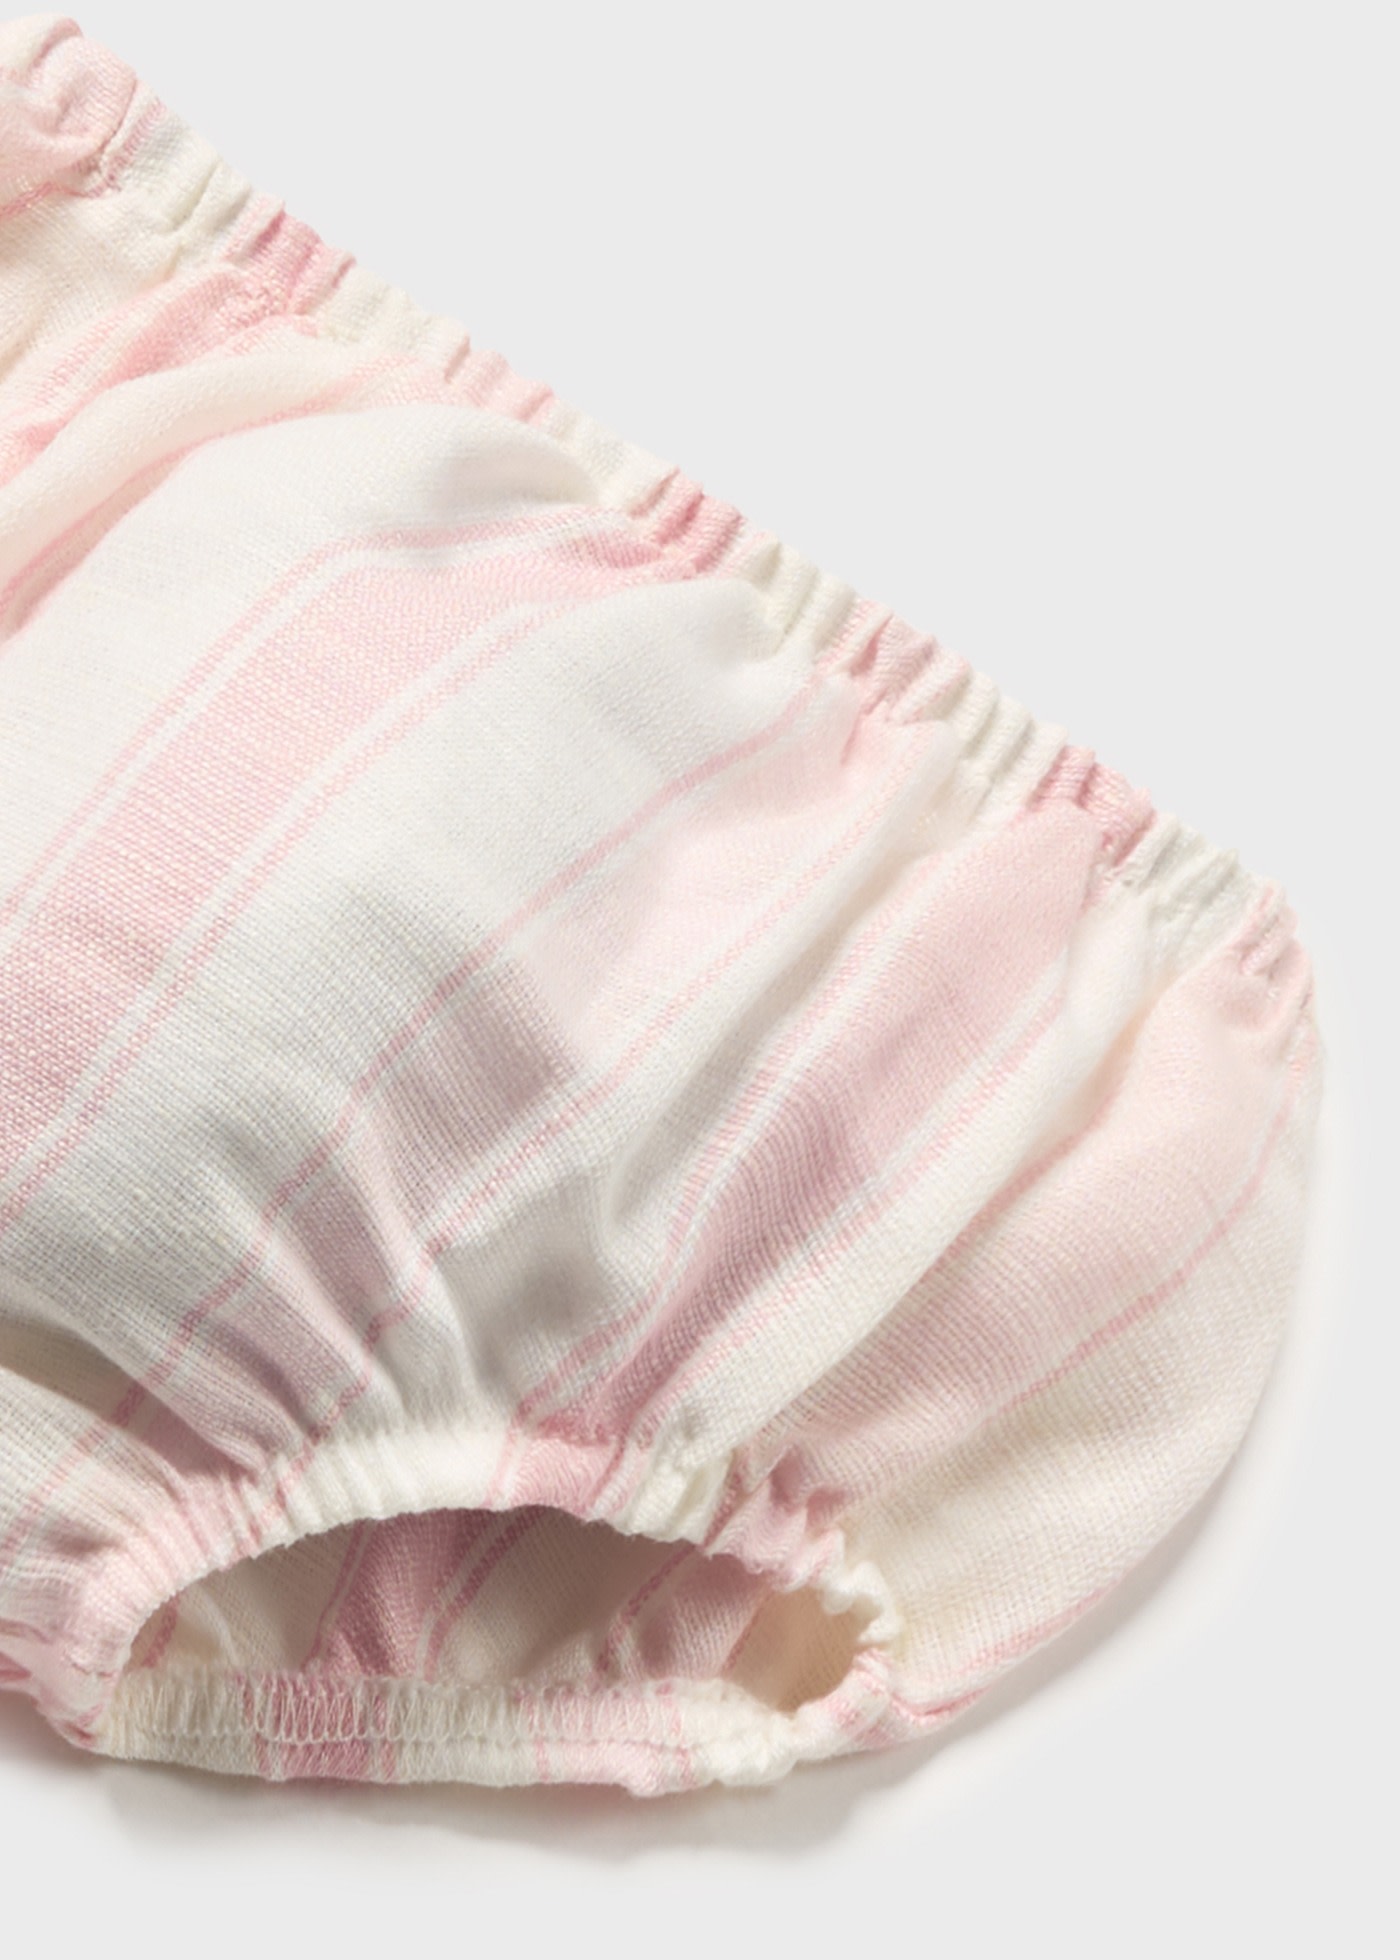 Robe rayée avec bloomer en lin européen nouveau-né